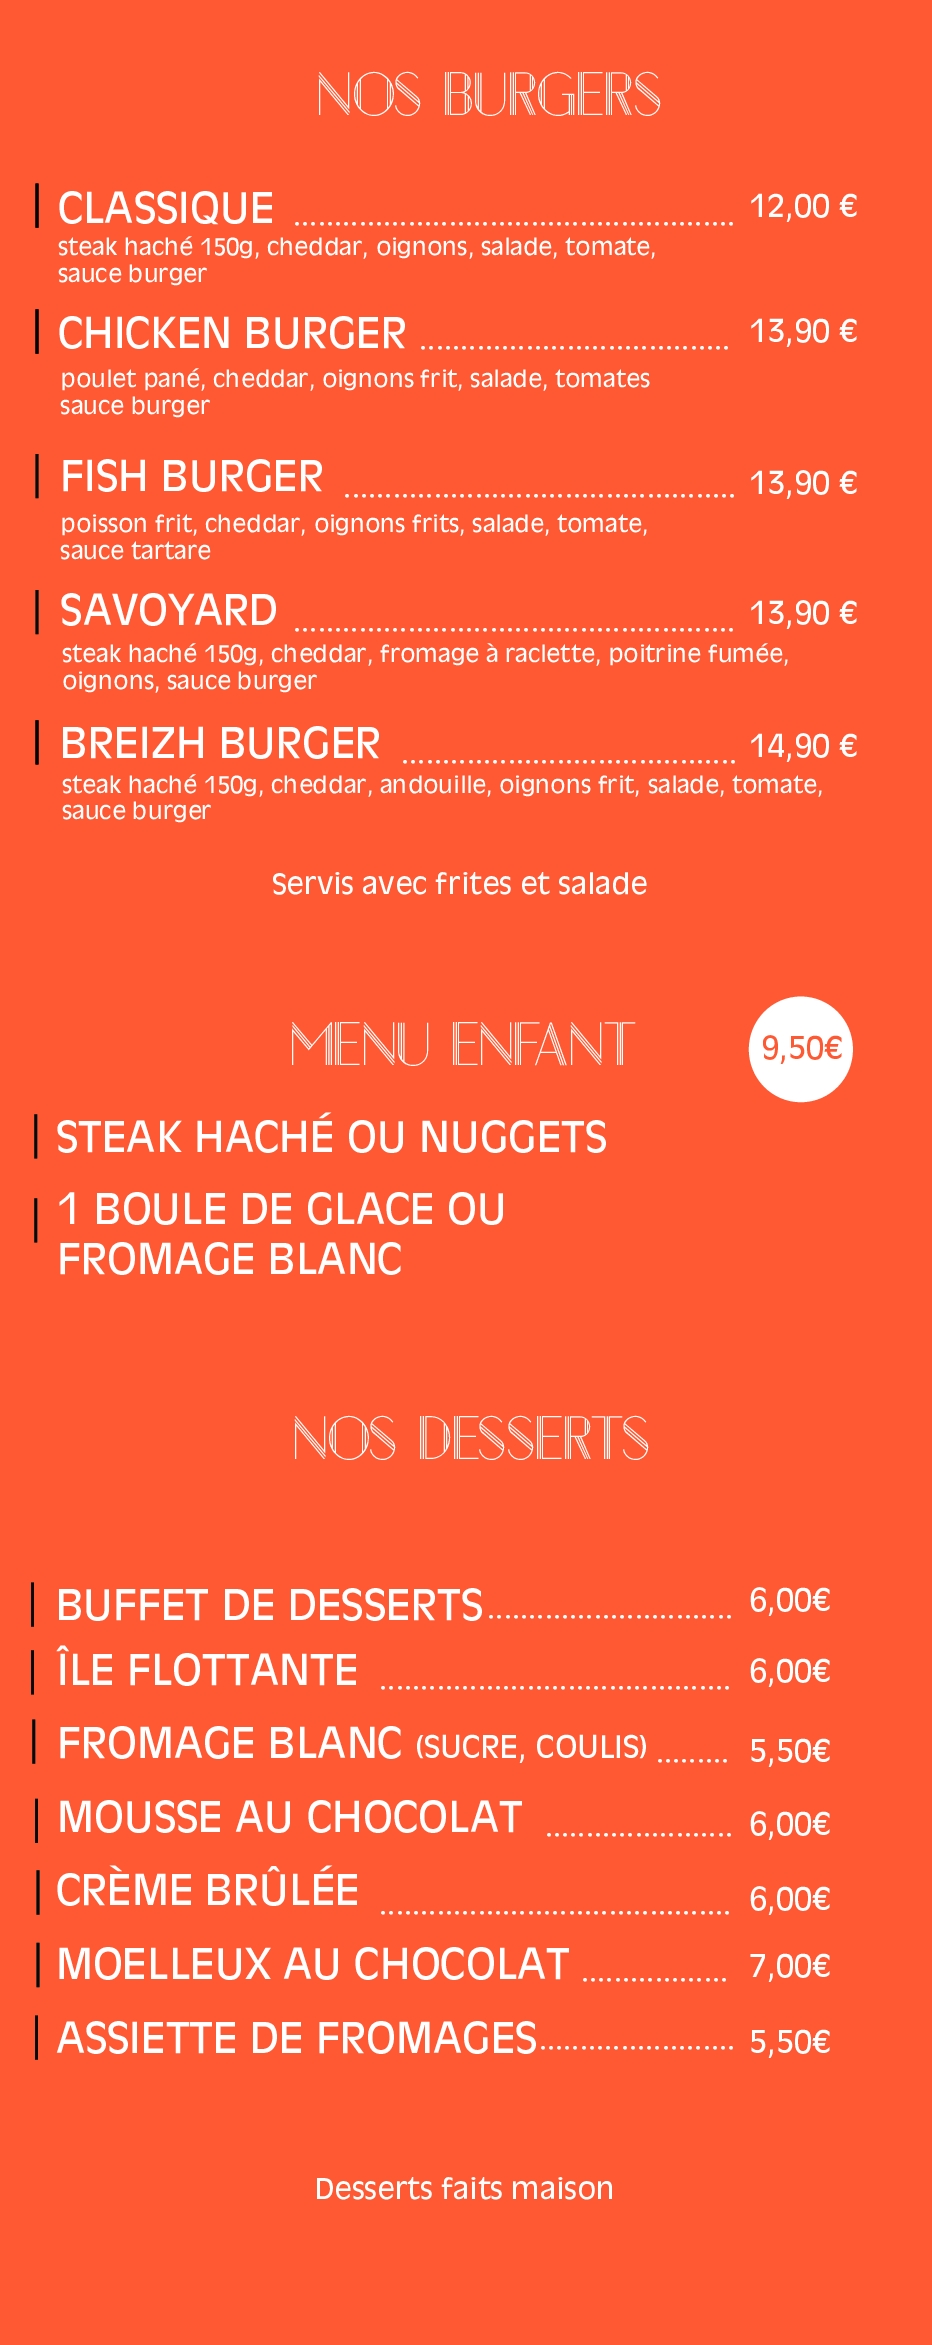 Restaurant L'exception Plérin - Burgers - Desserts